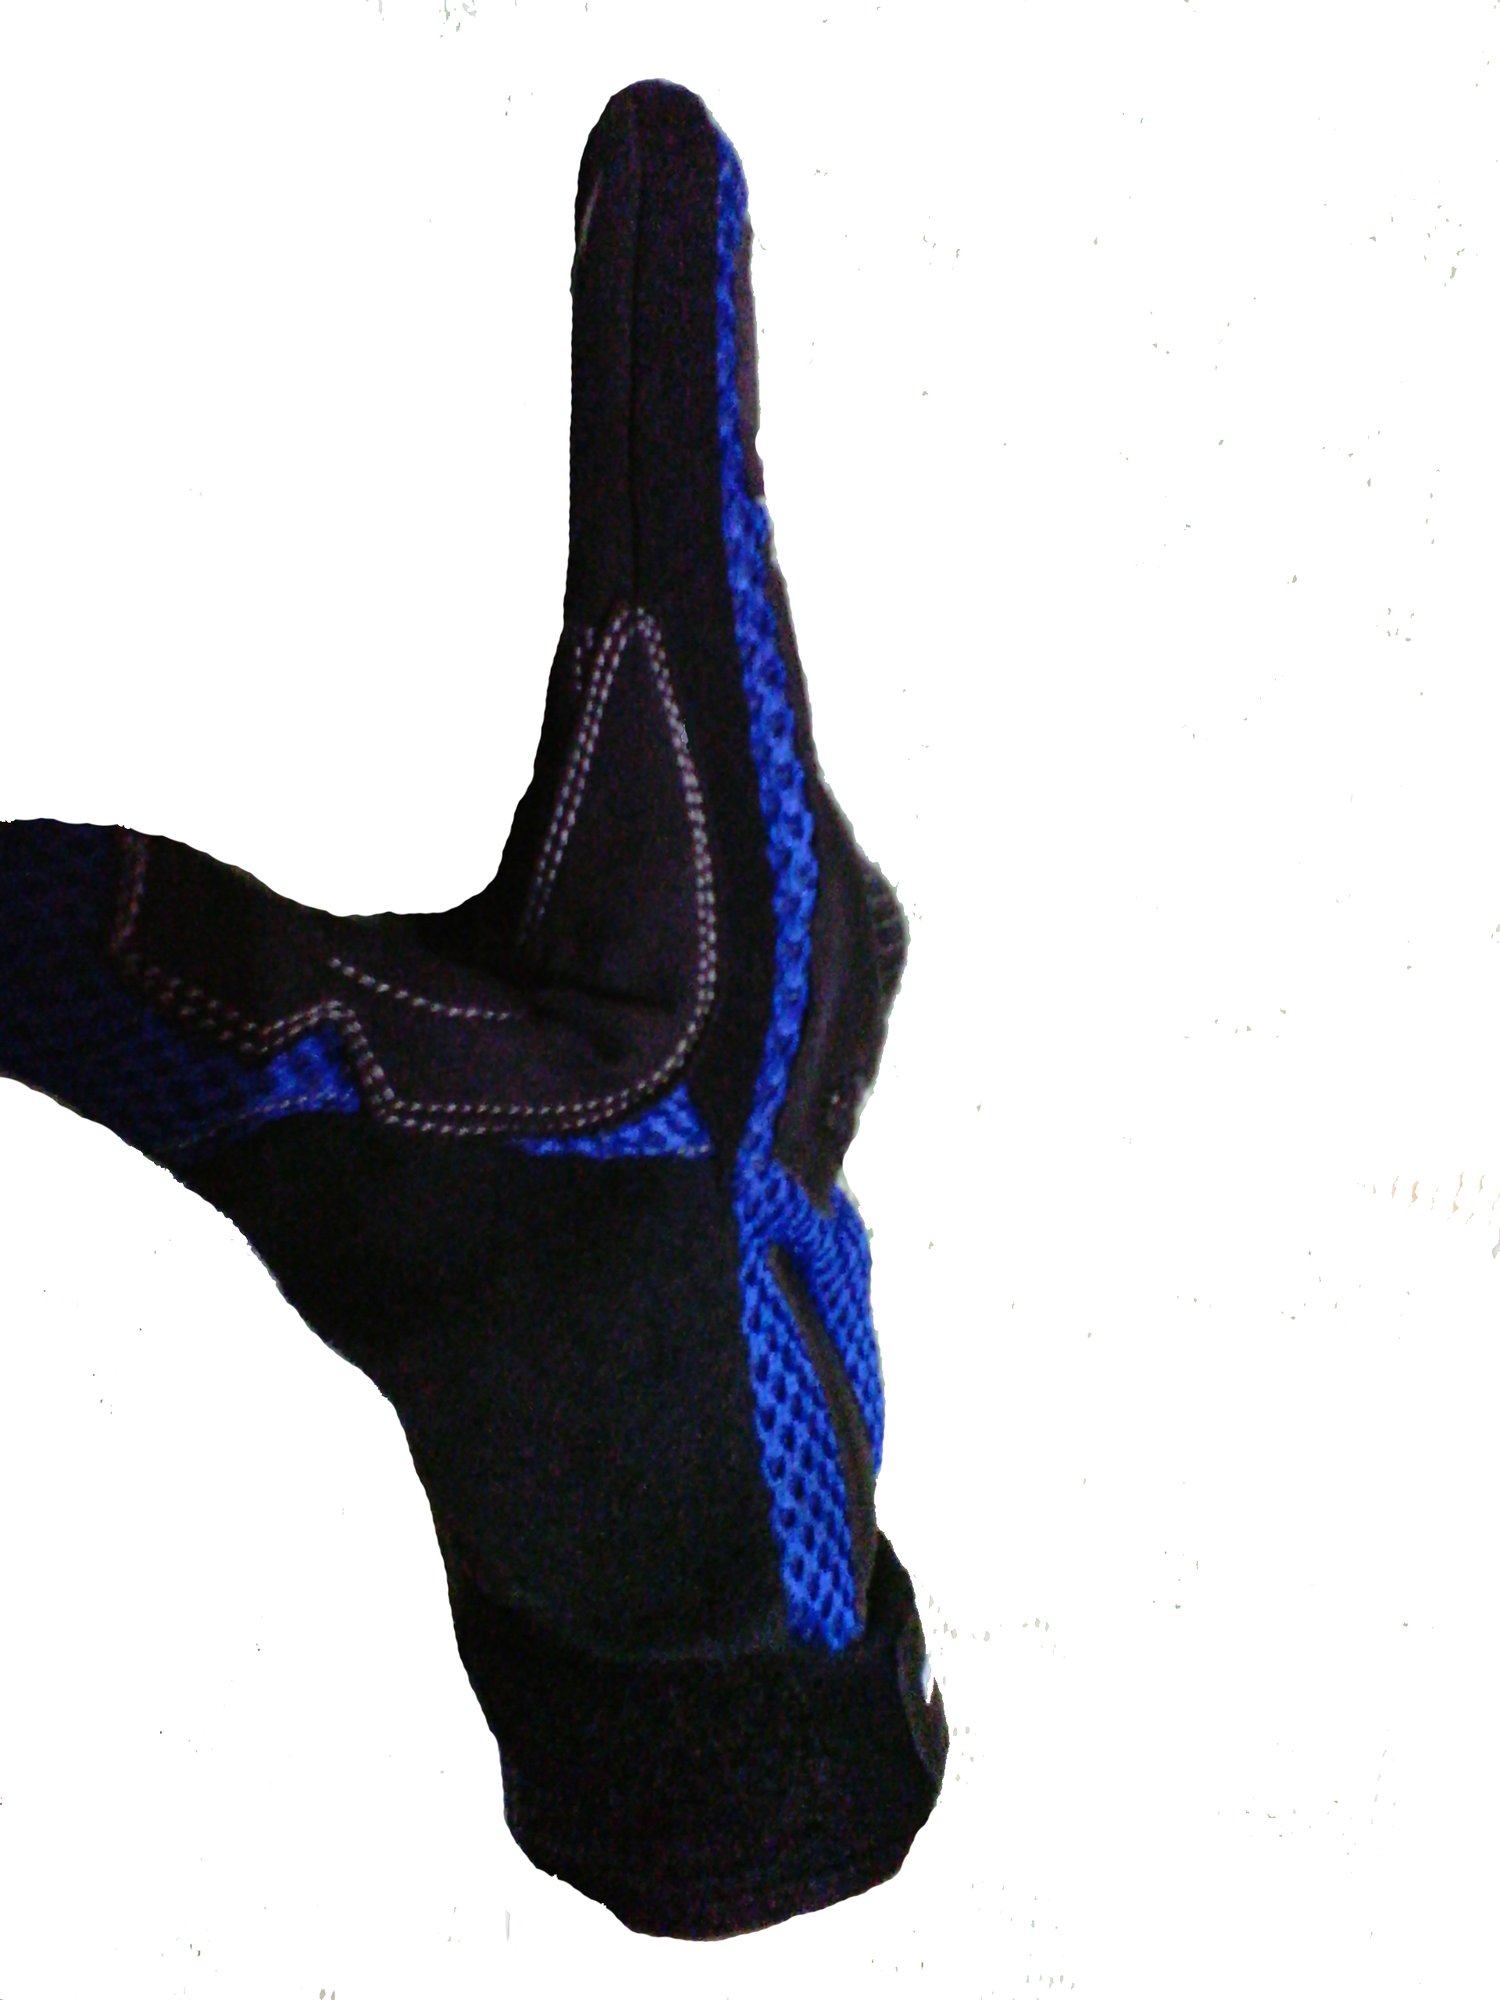 Image of Dark Blue Enduro Crossover Gloves